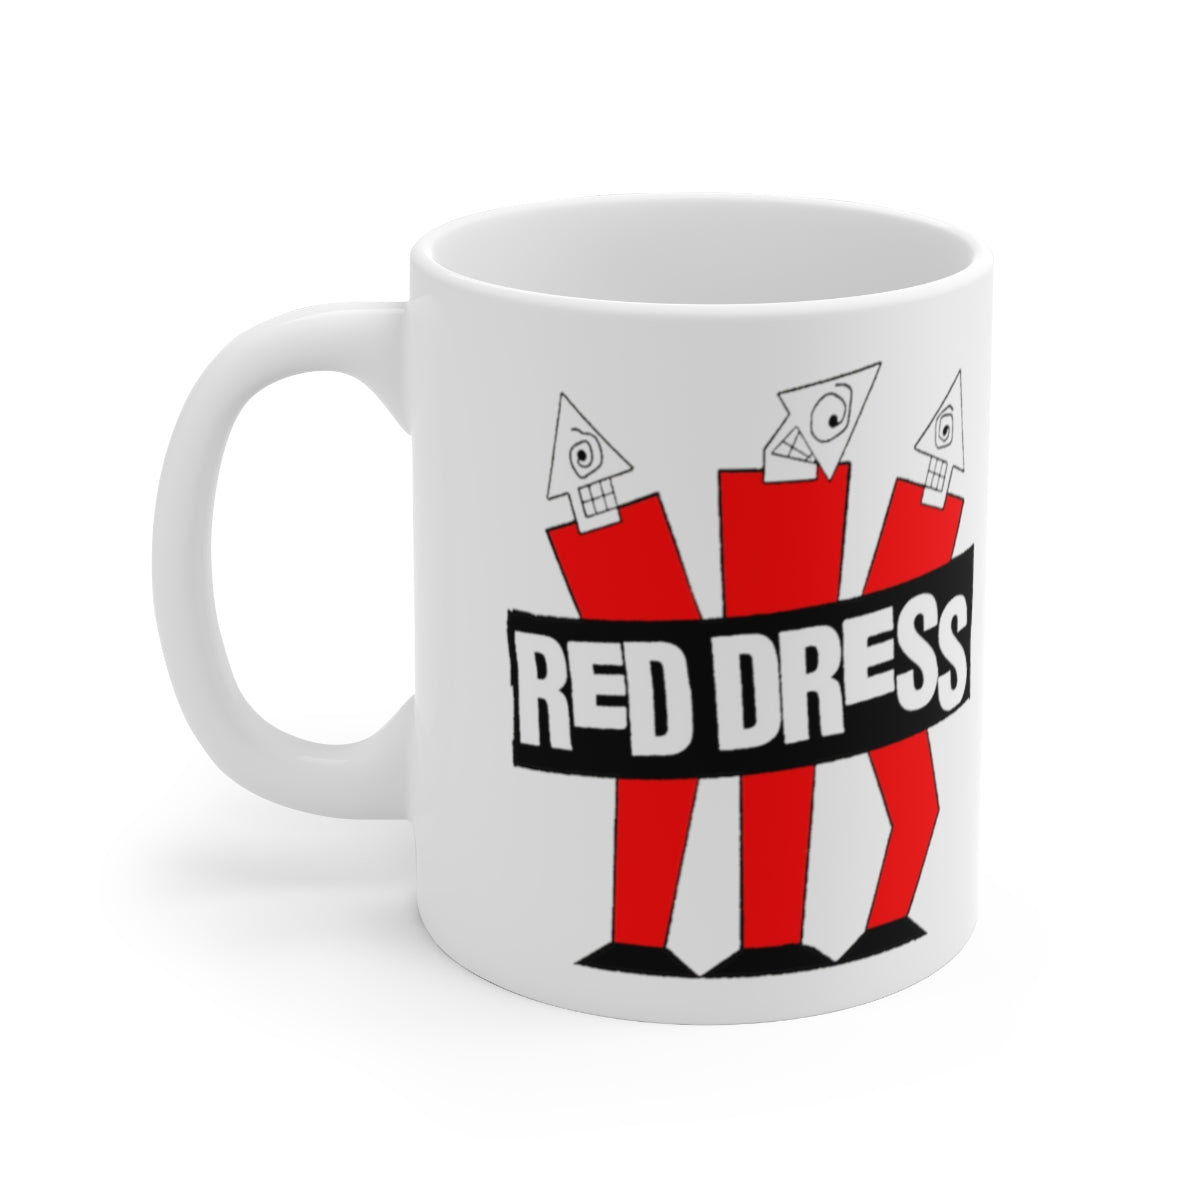 RED DRESS White Ceramic Mug